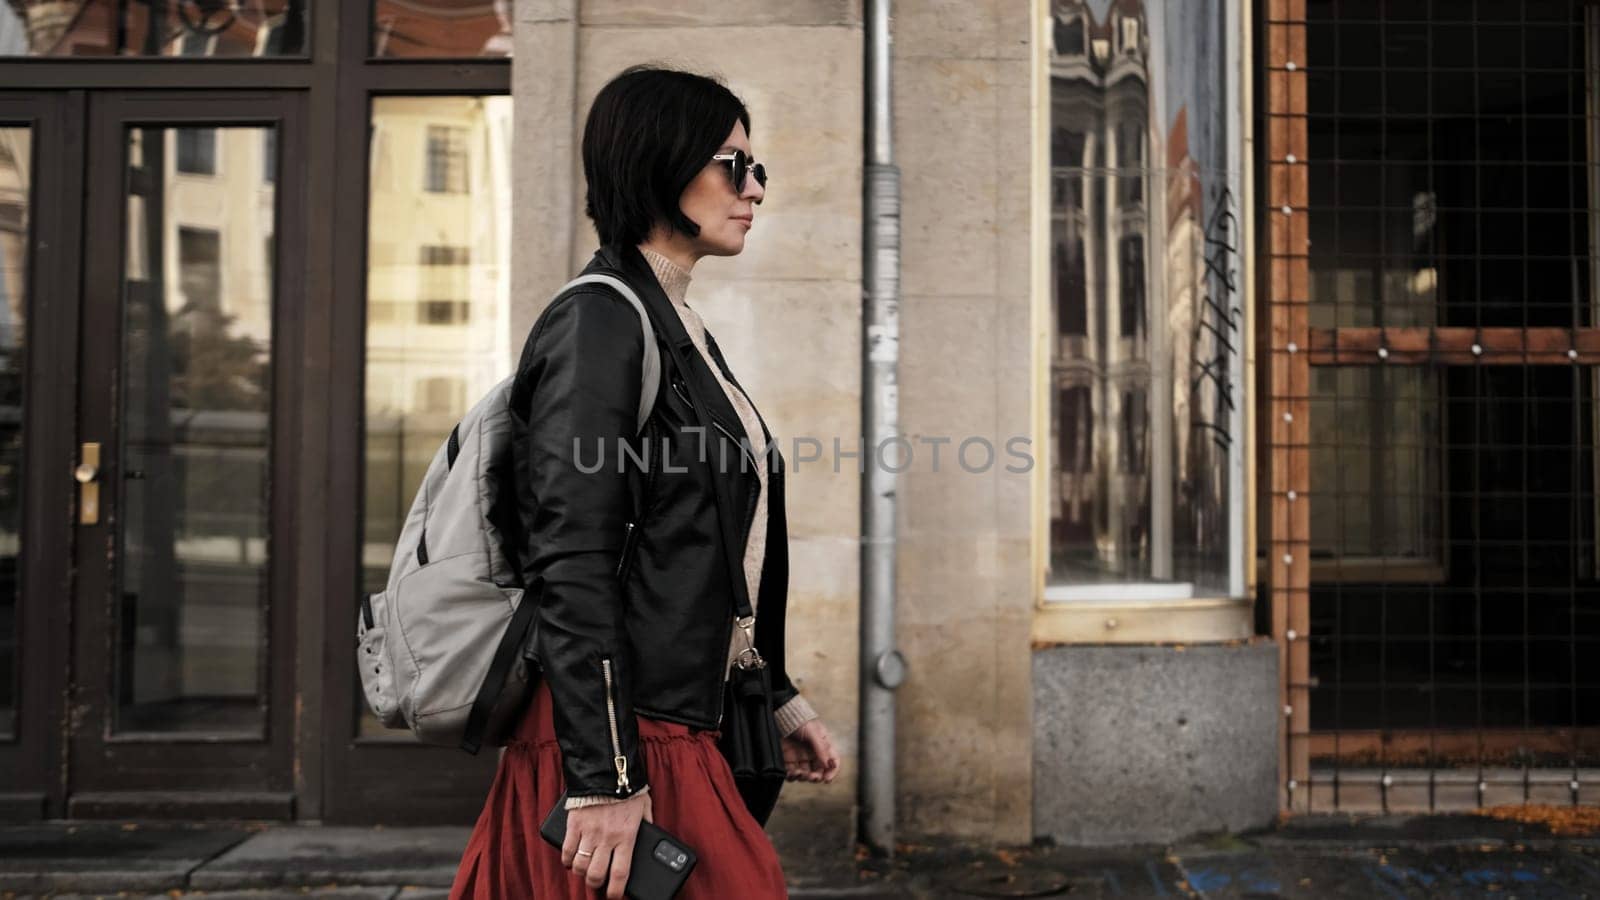 Stylish Woman With Sunglasses Strolls Down City Street by GekaSkr